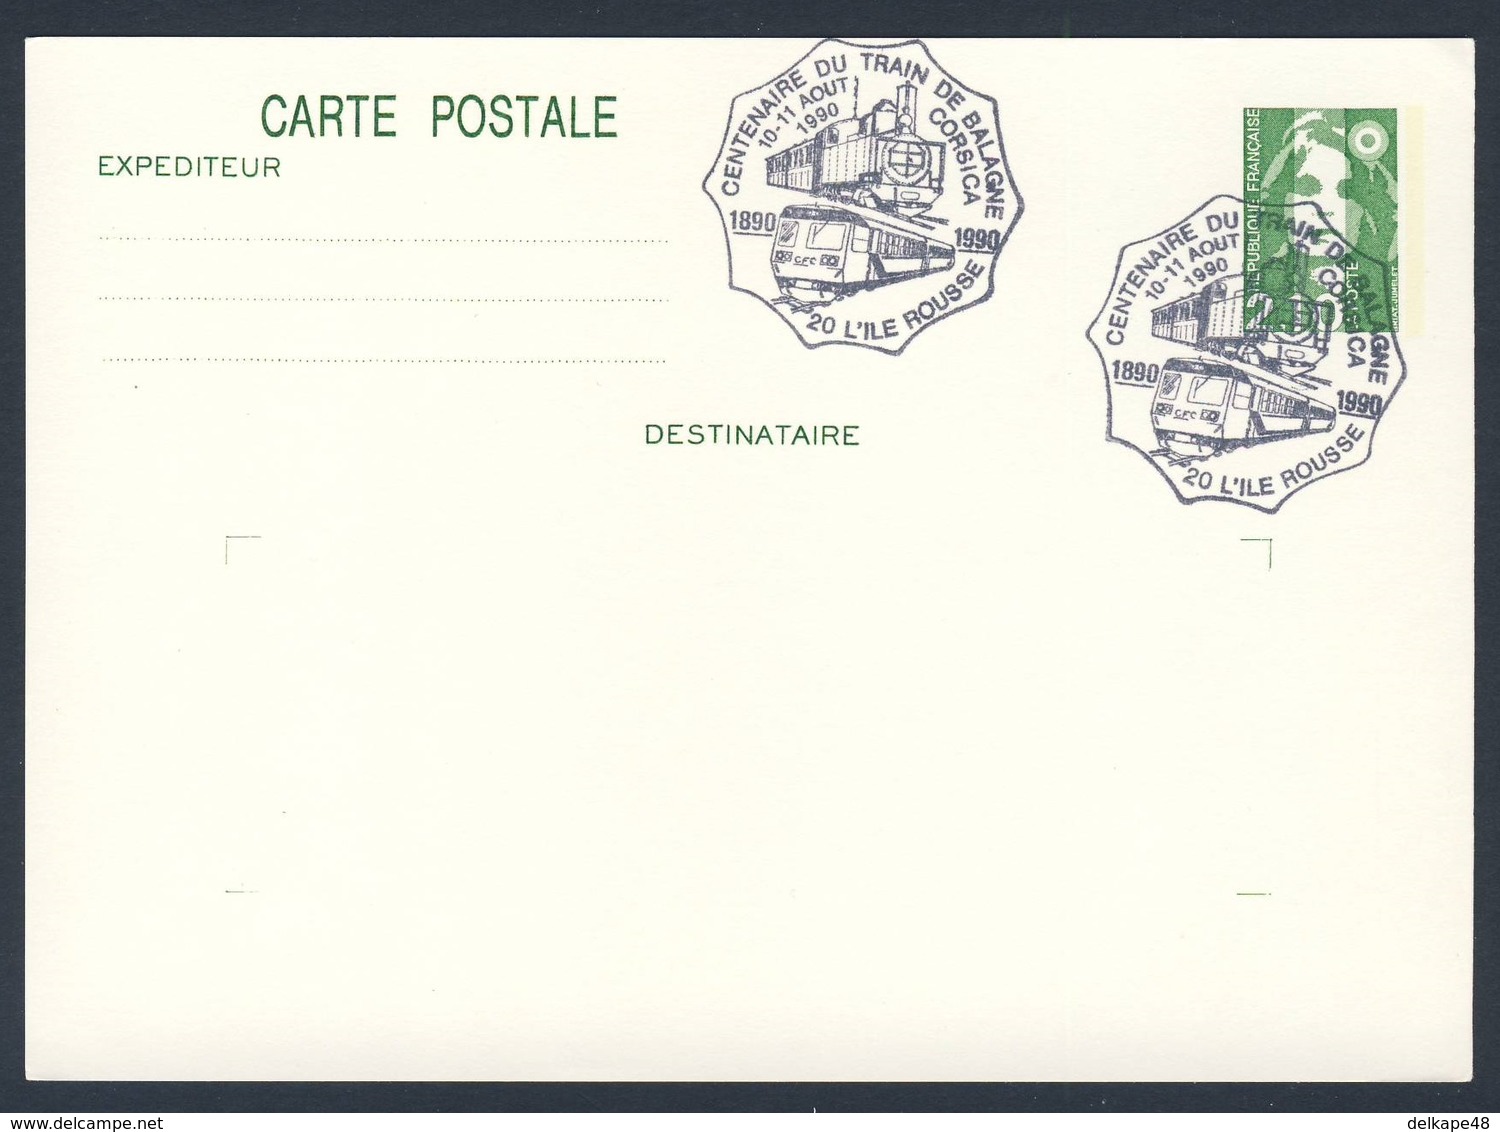 France Rep. Française 1990 Card / Karte / Carte - Cent. Train De Balagne, 1890-1990, Corsica / Eisenbahn - Treinen